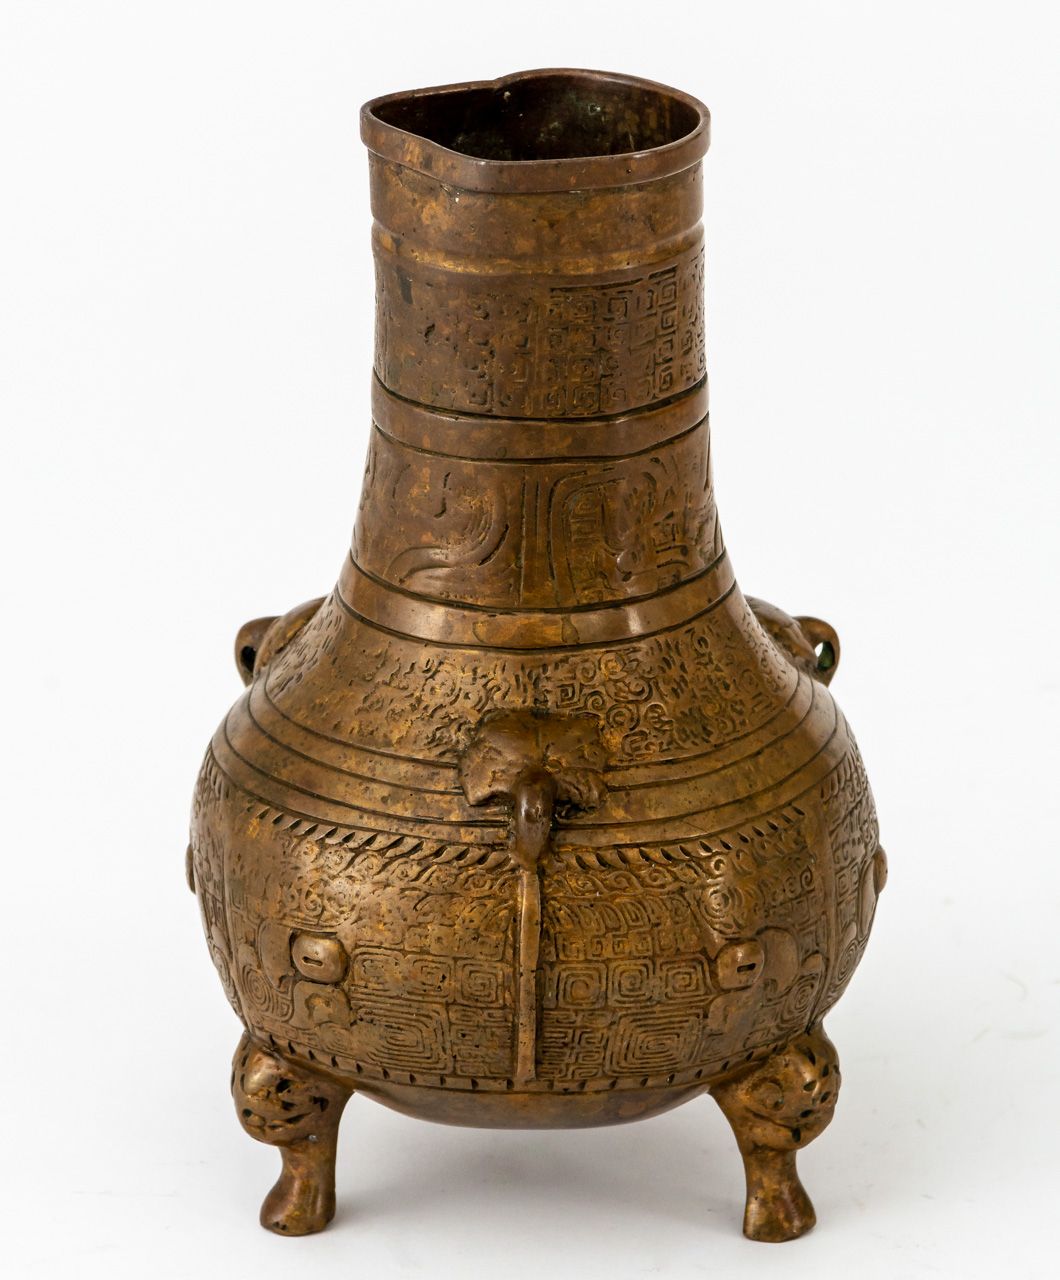 DREI-FUSS-VASE China, bronce, siglo XIX o anterior

16,5 cm de altura